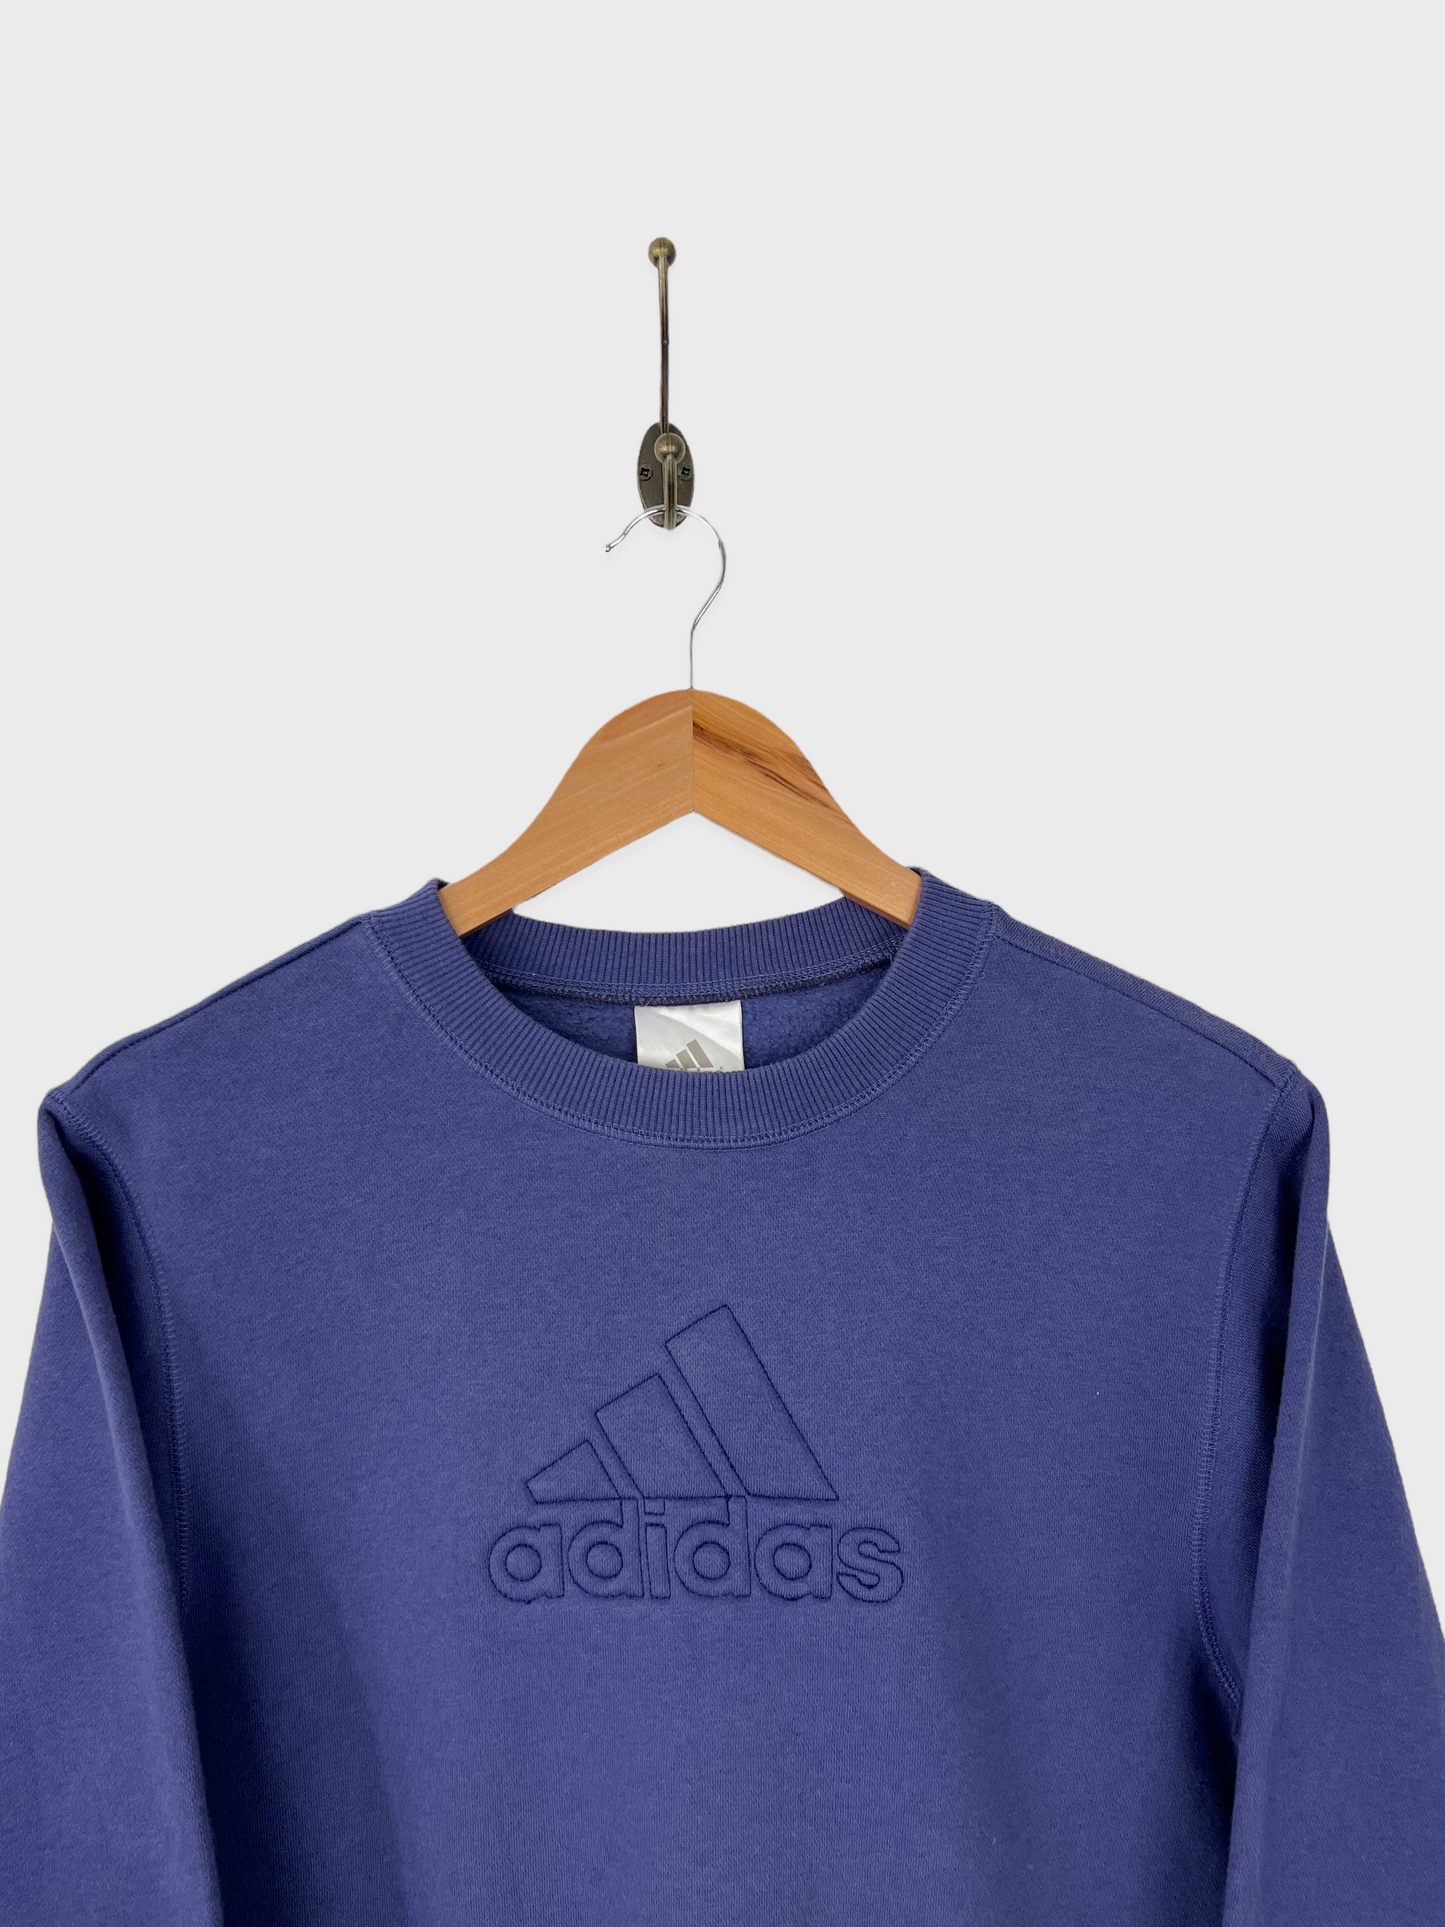 90's Adidas Embroidered Vintage Sweatshirt Size 6-8